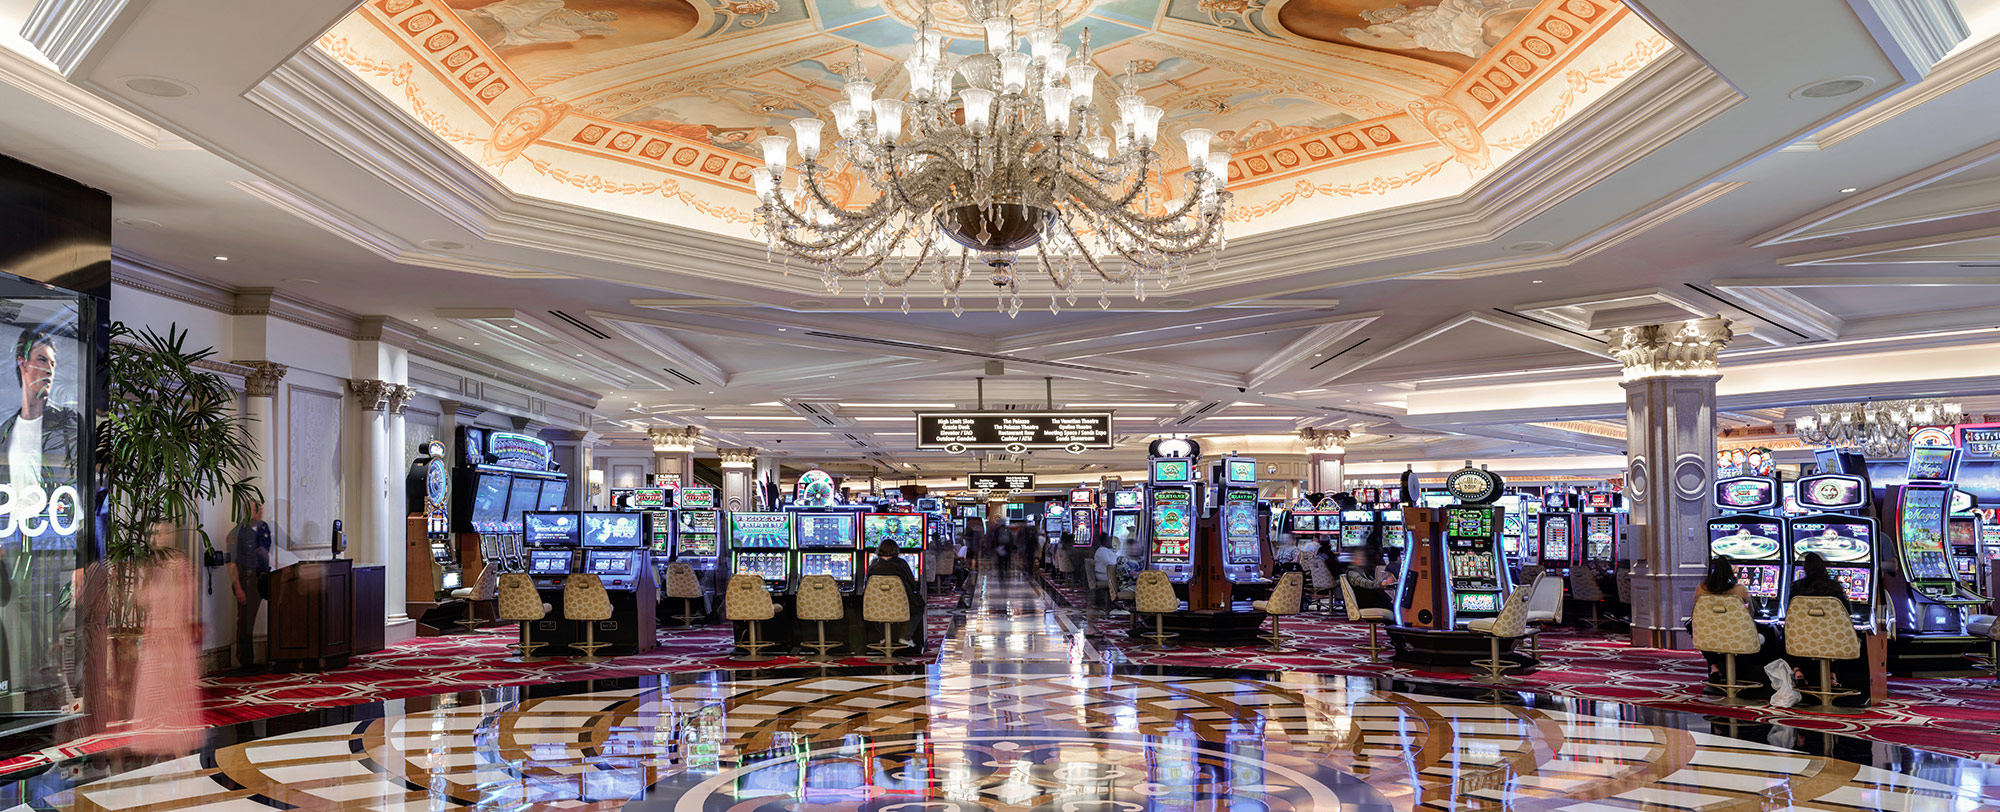 restaurants inside live casino